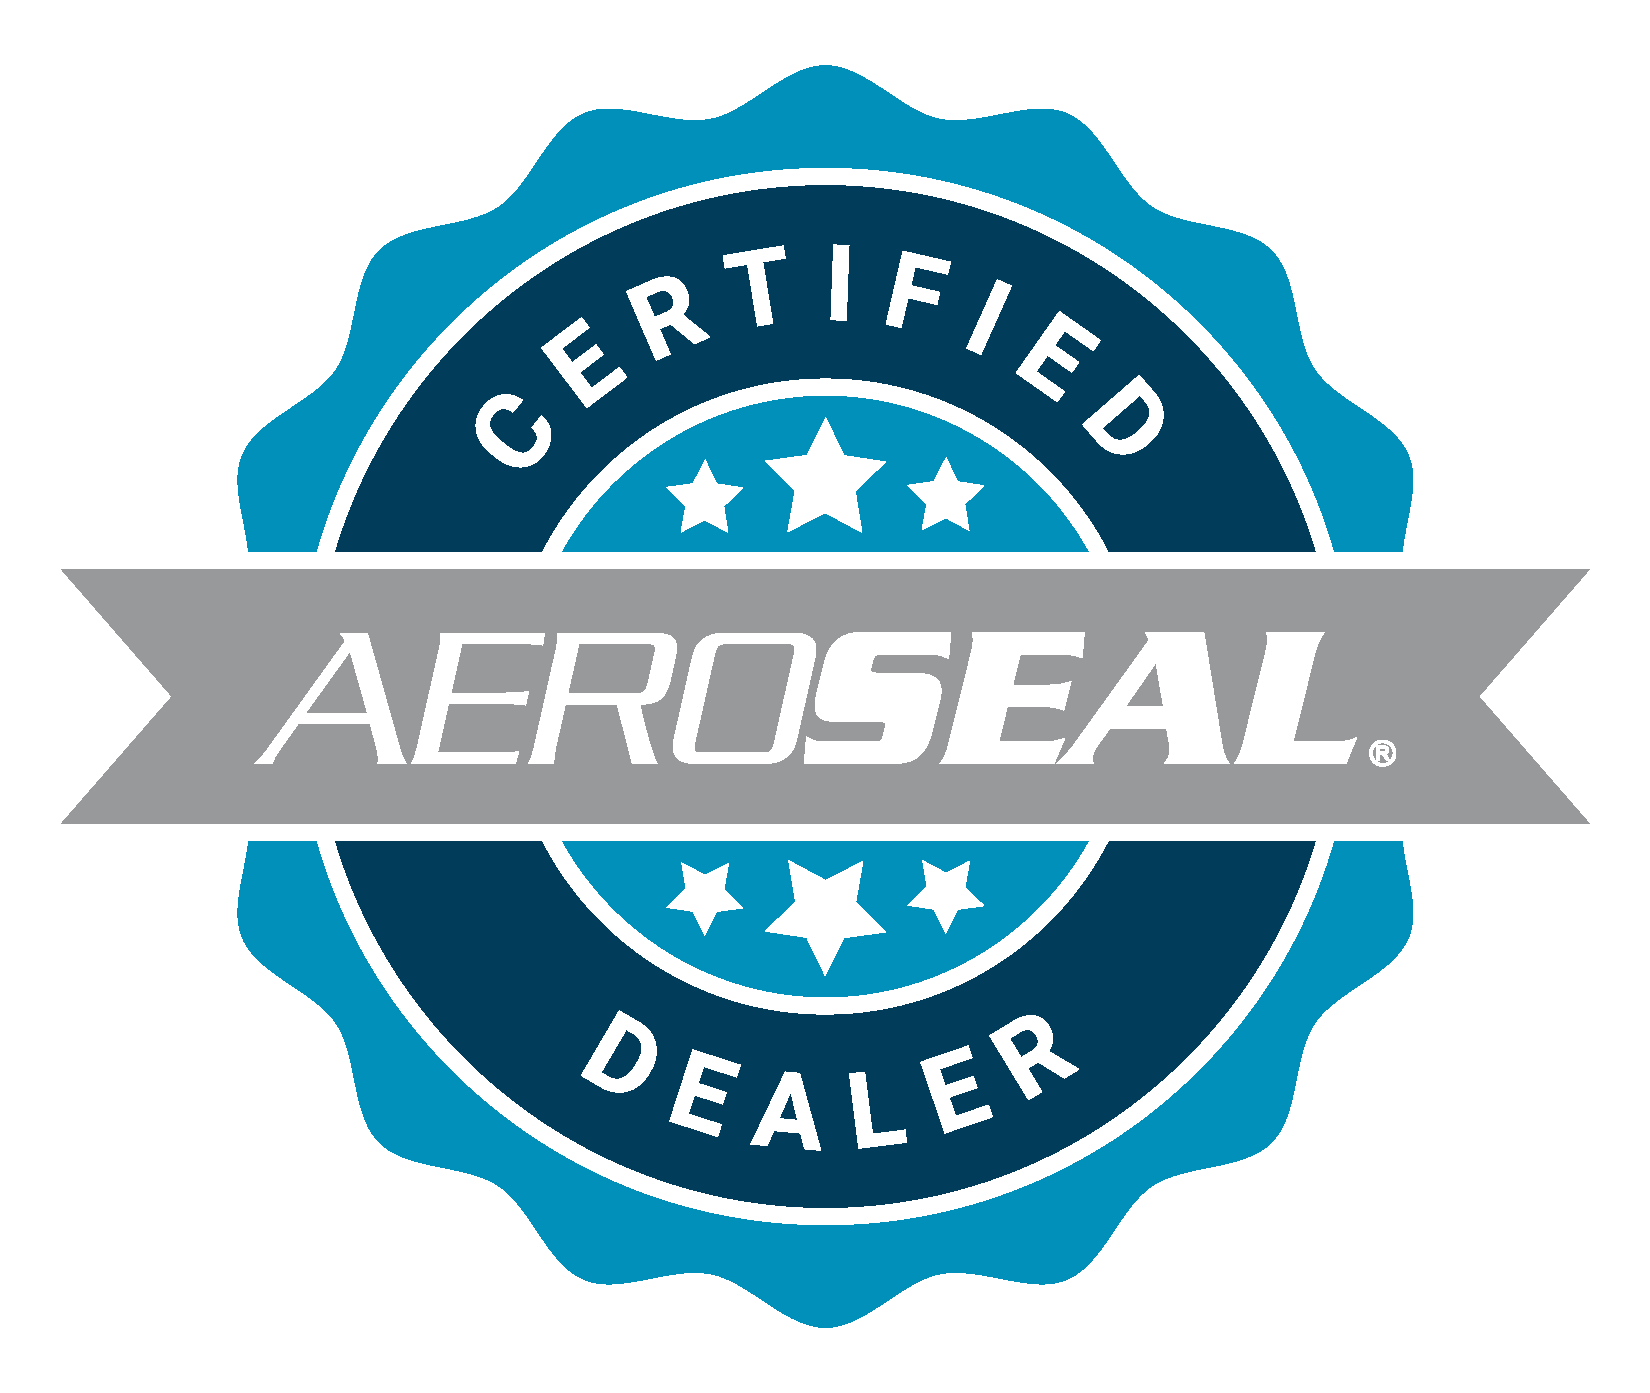 Air Duct Sealing - Aeroseal Certified Dealer